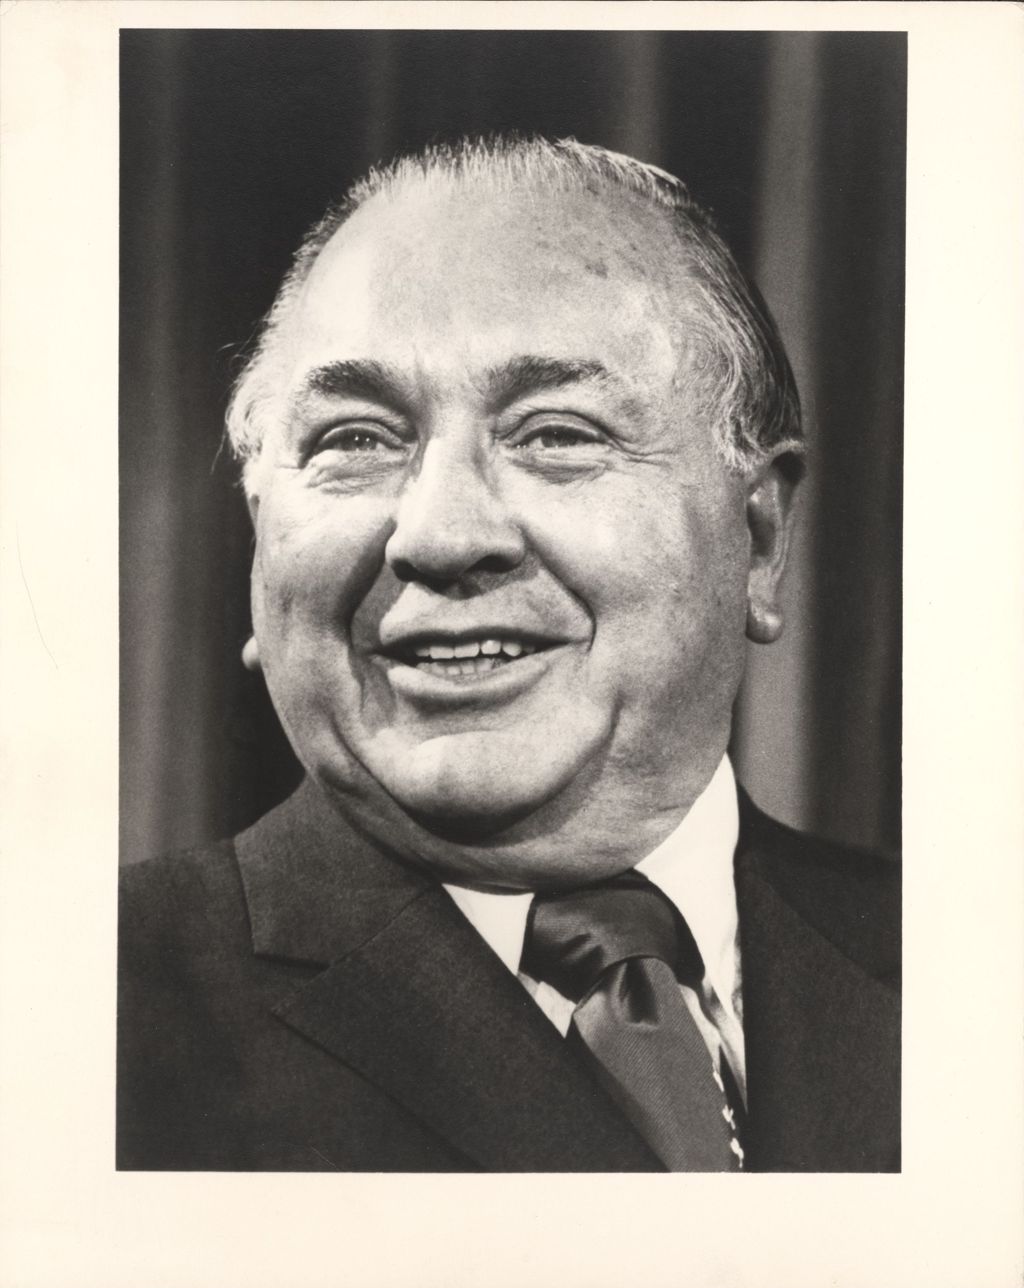 Miniature of Richard J. Daley smiling